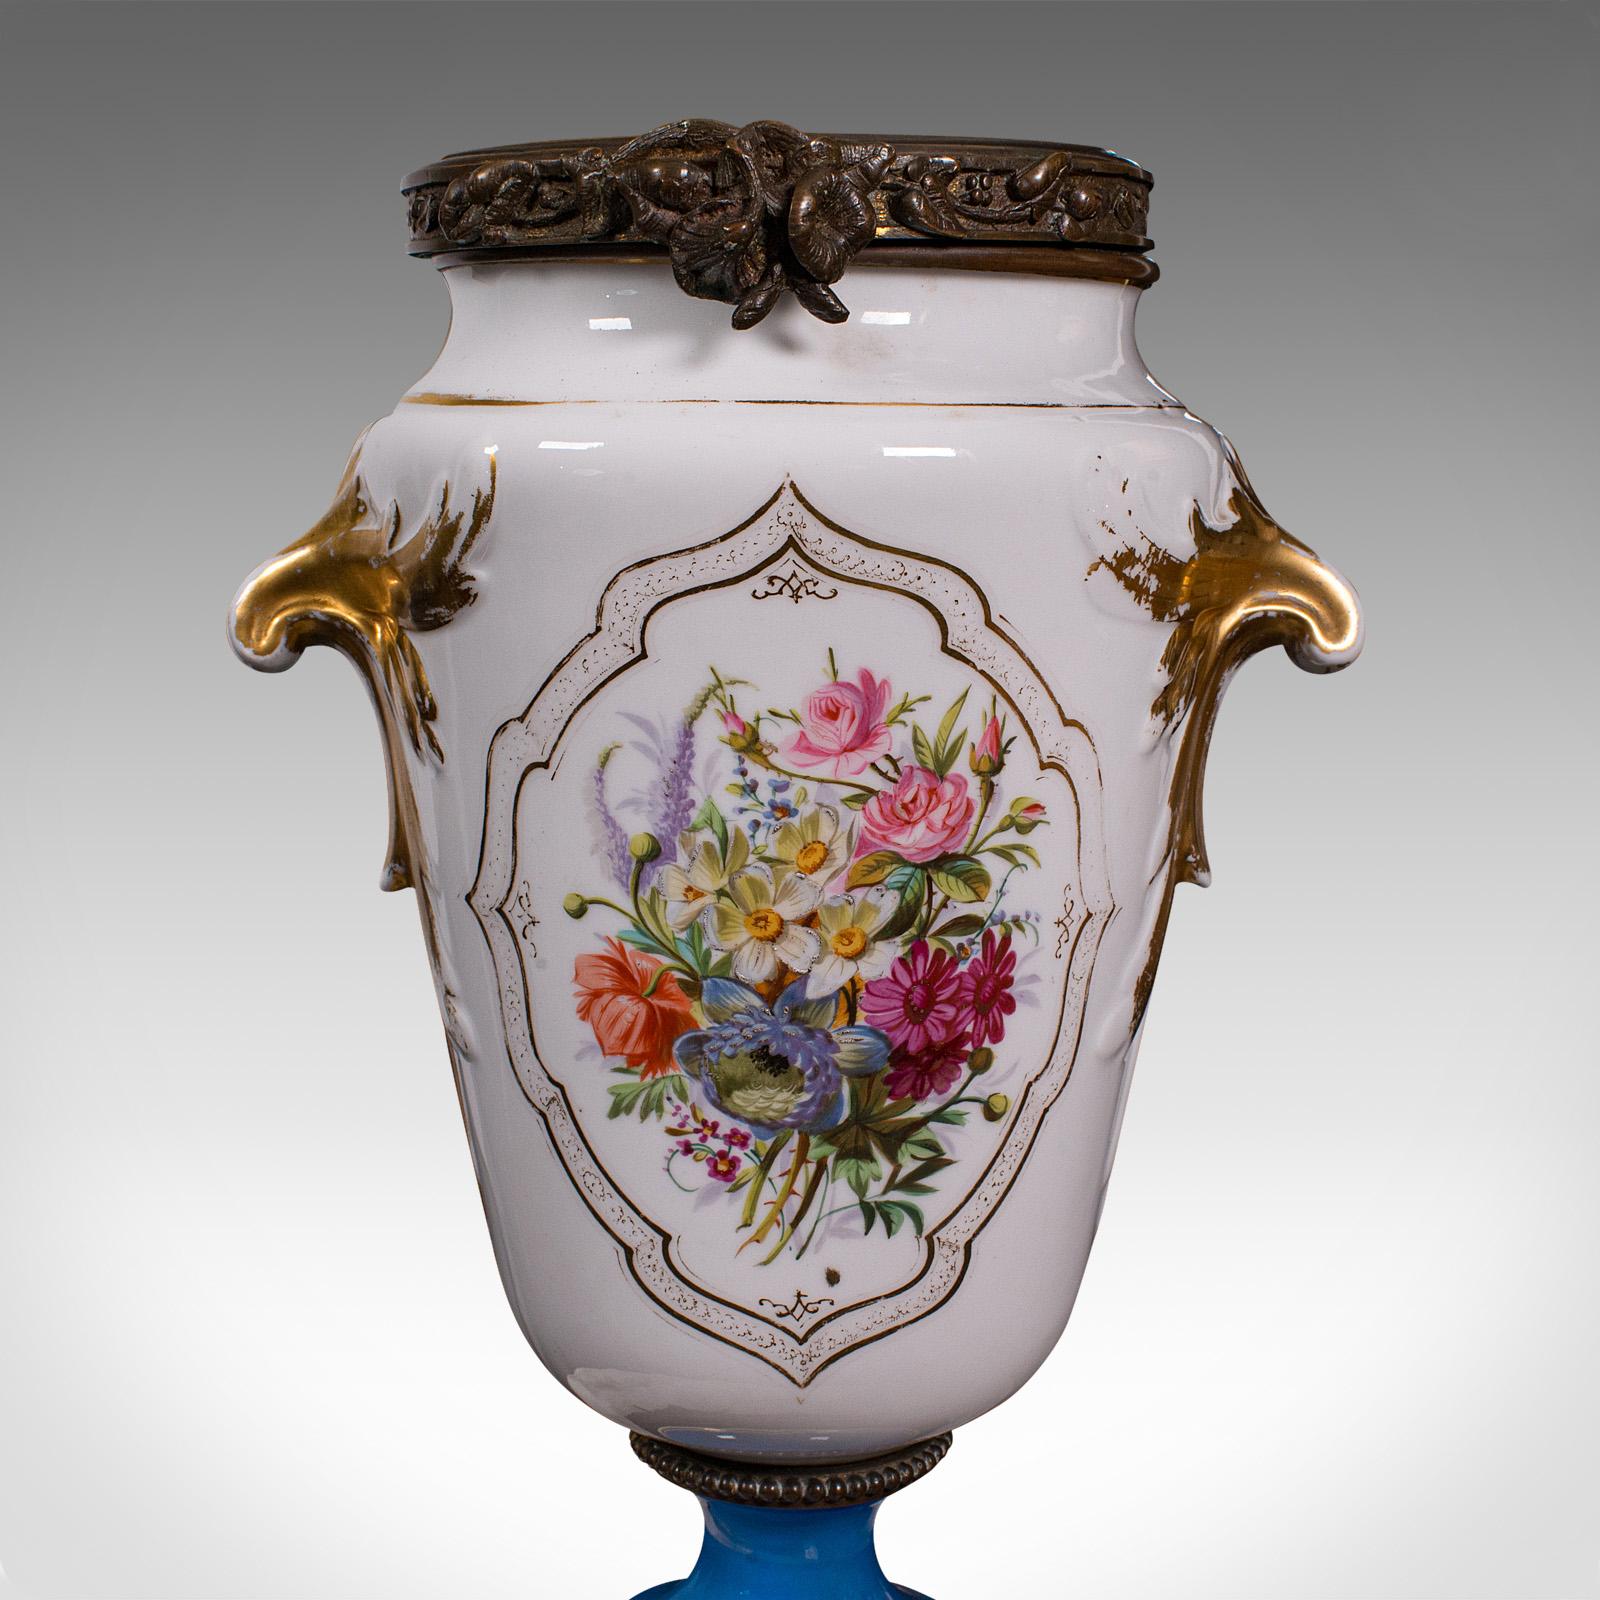 Antique Decorative Jardiniere, French, Ceramic, Display Planter, Vase, Victorian For Sale 4